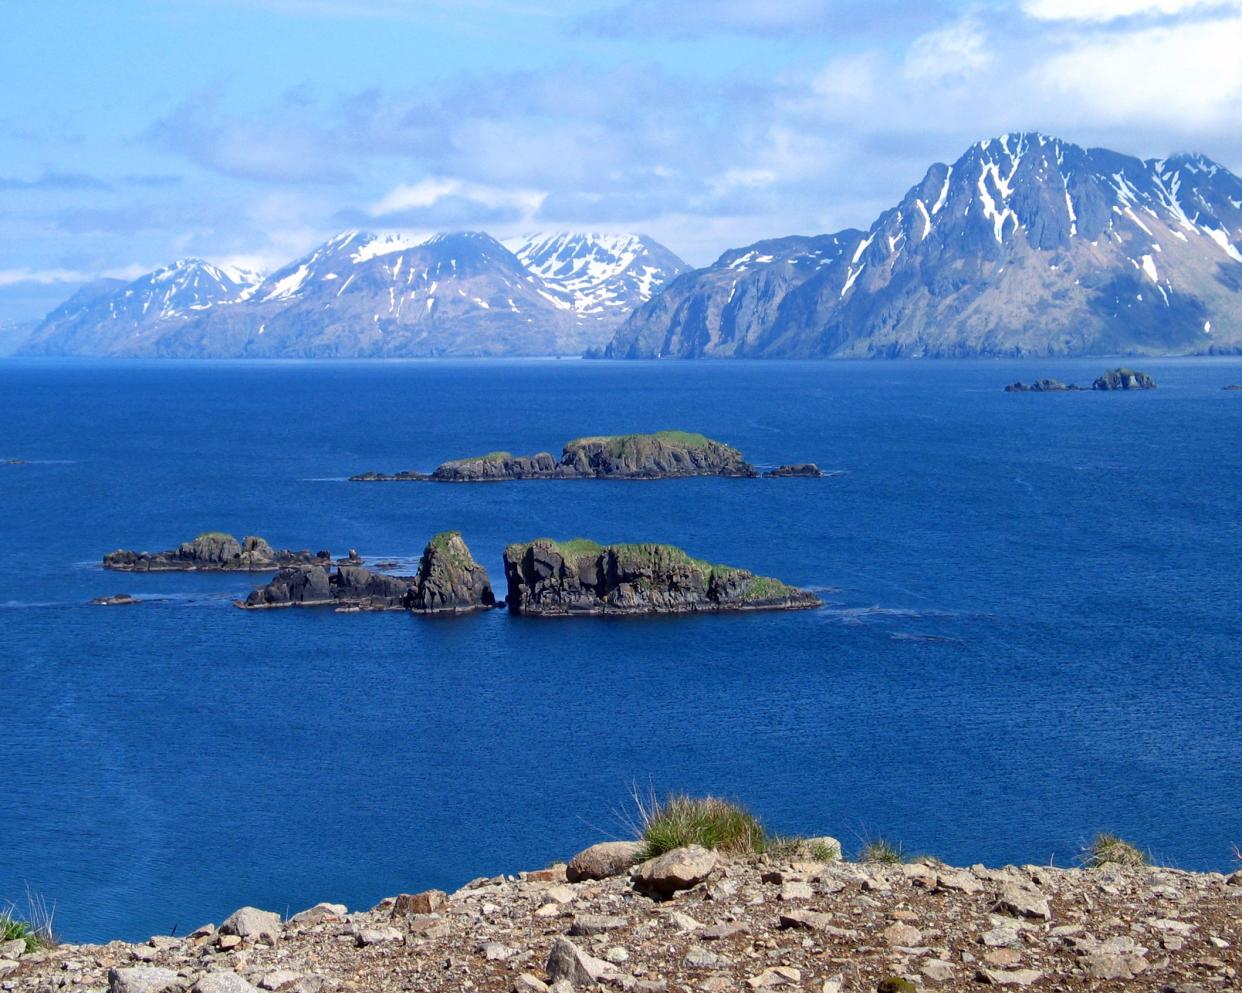 Adak Island in Alaska